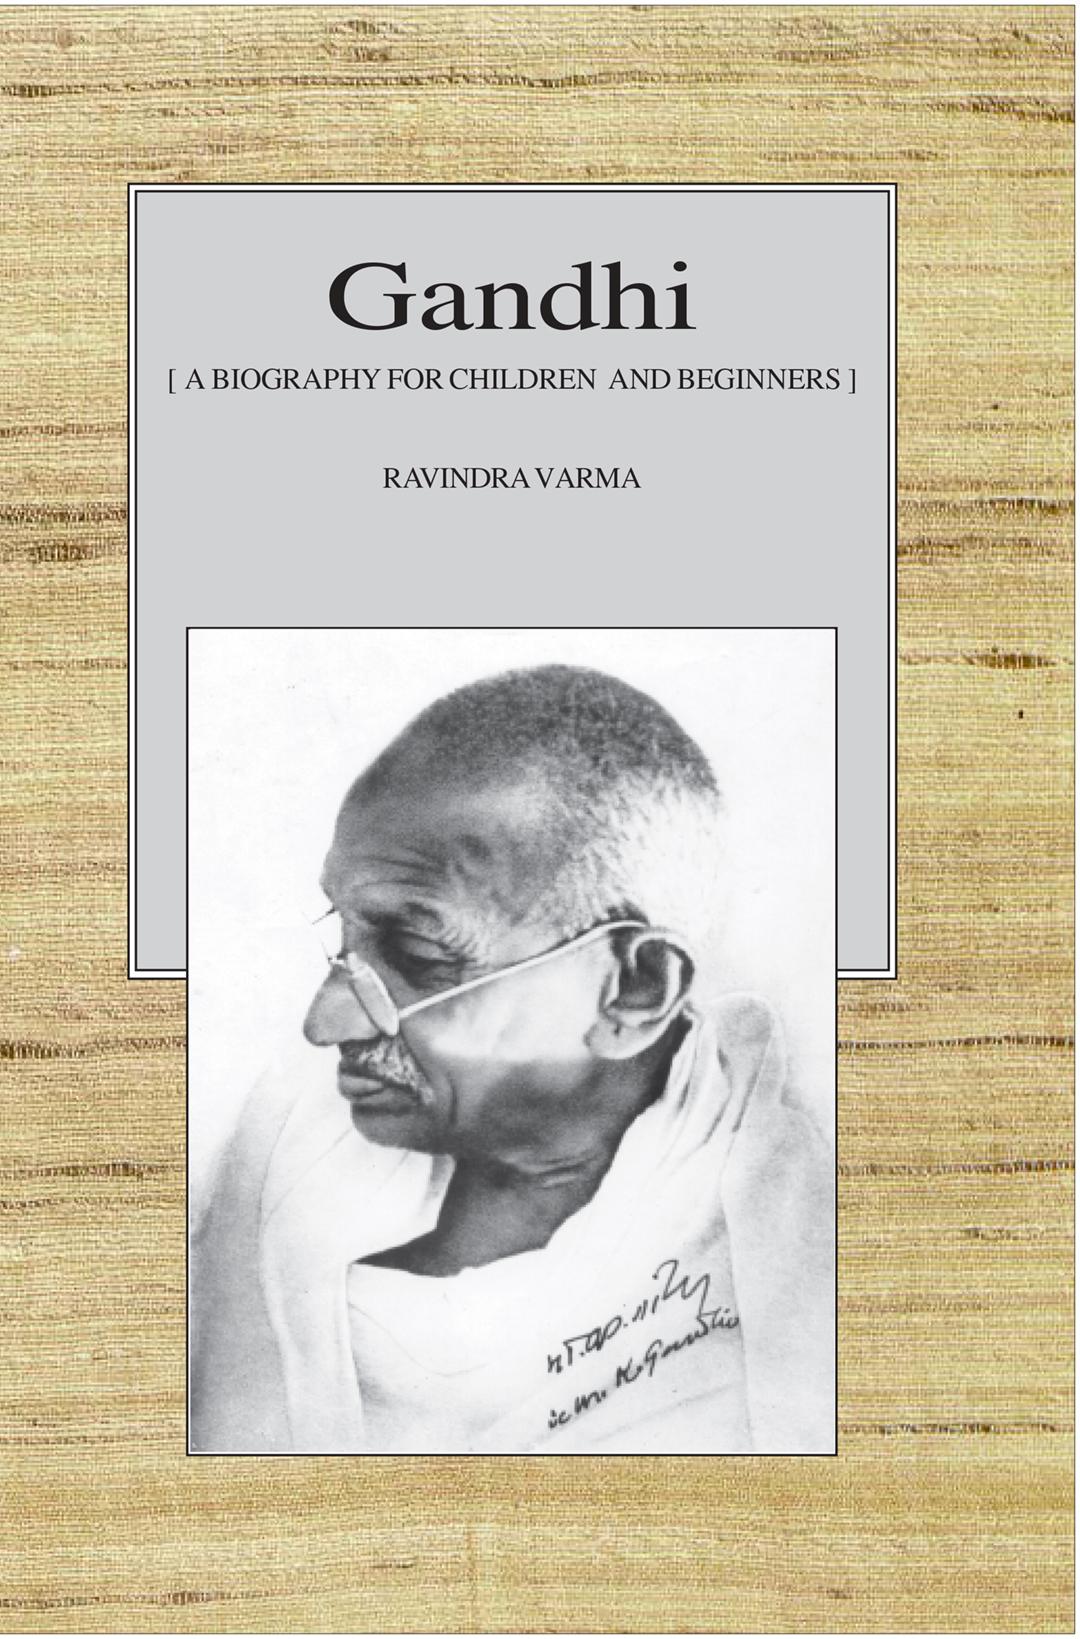 mahatma gandhi biography book pdf